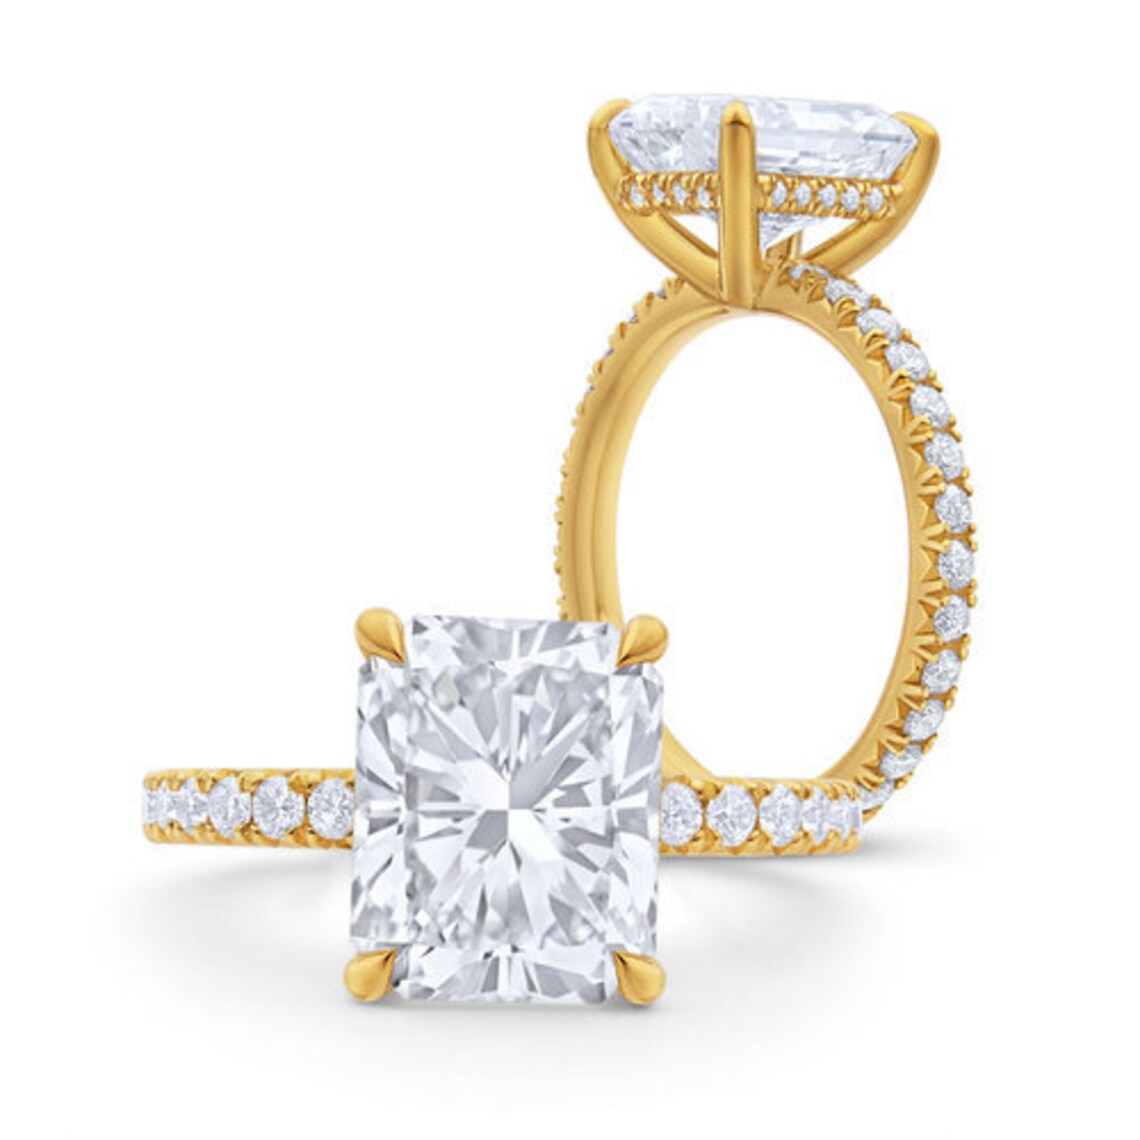 Channel Setting Radiant Moissanite Engagement Ring, Hidden Halo Diamond Ring, Solitaire Promise Ring